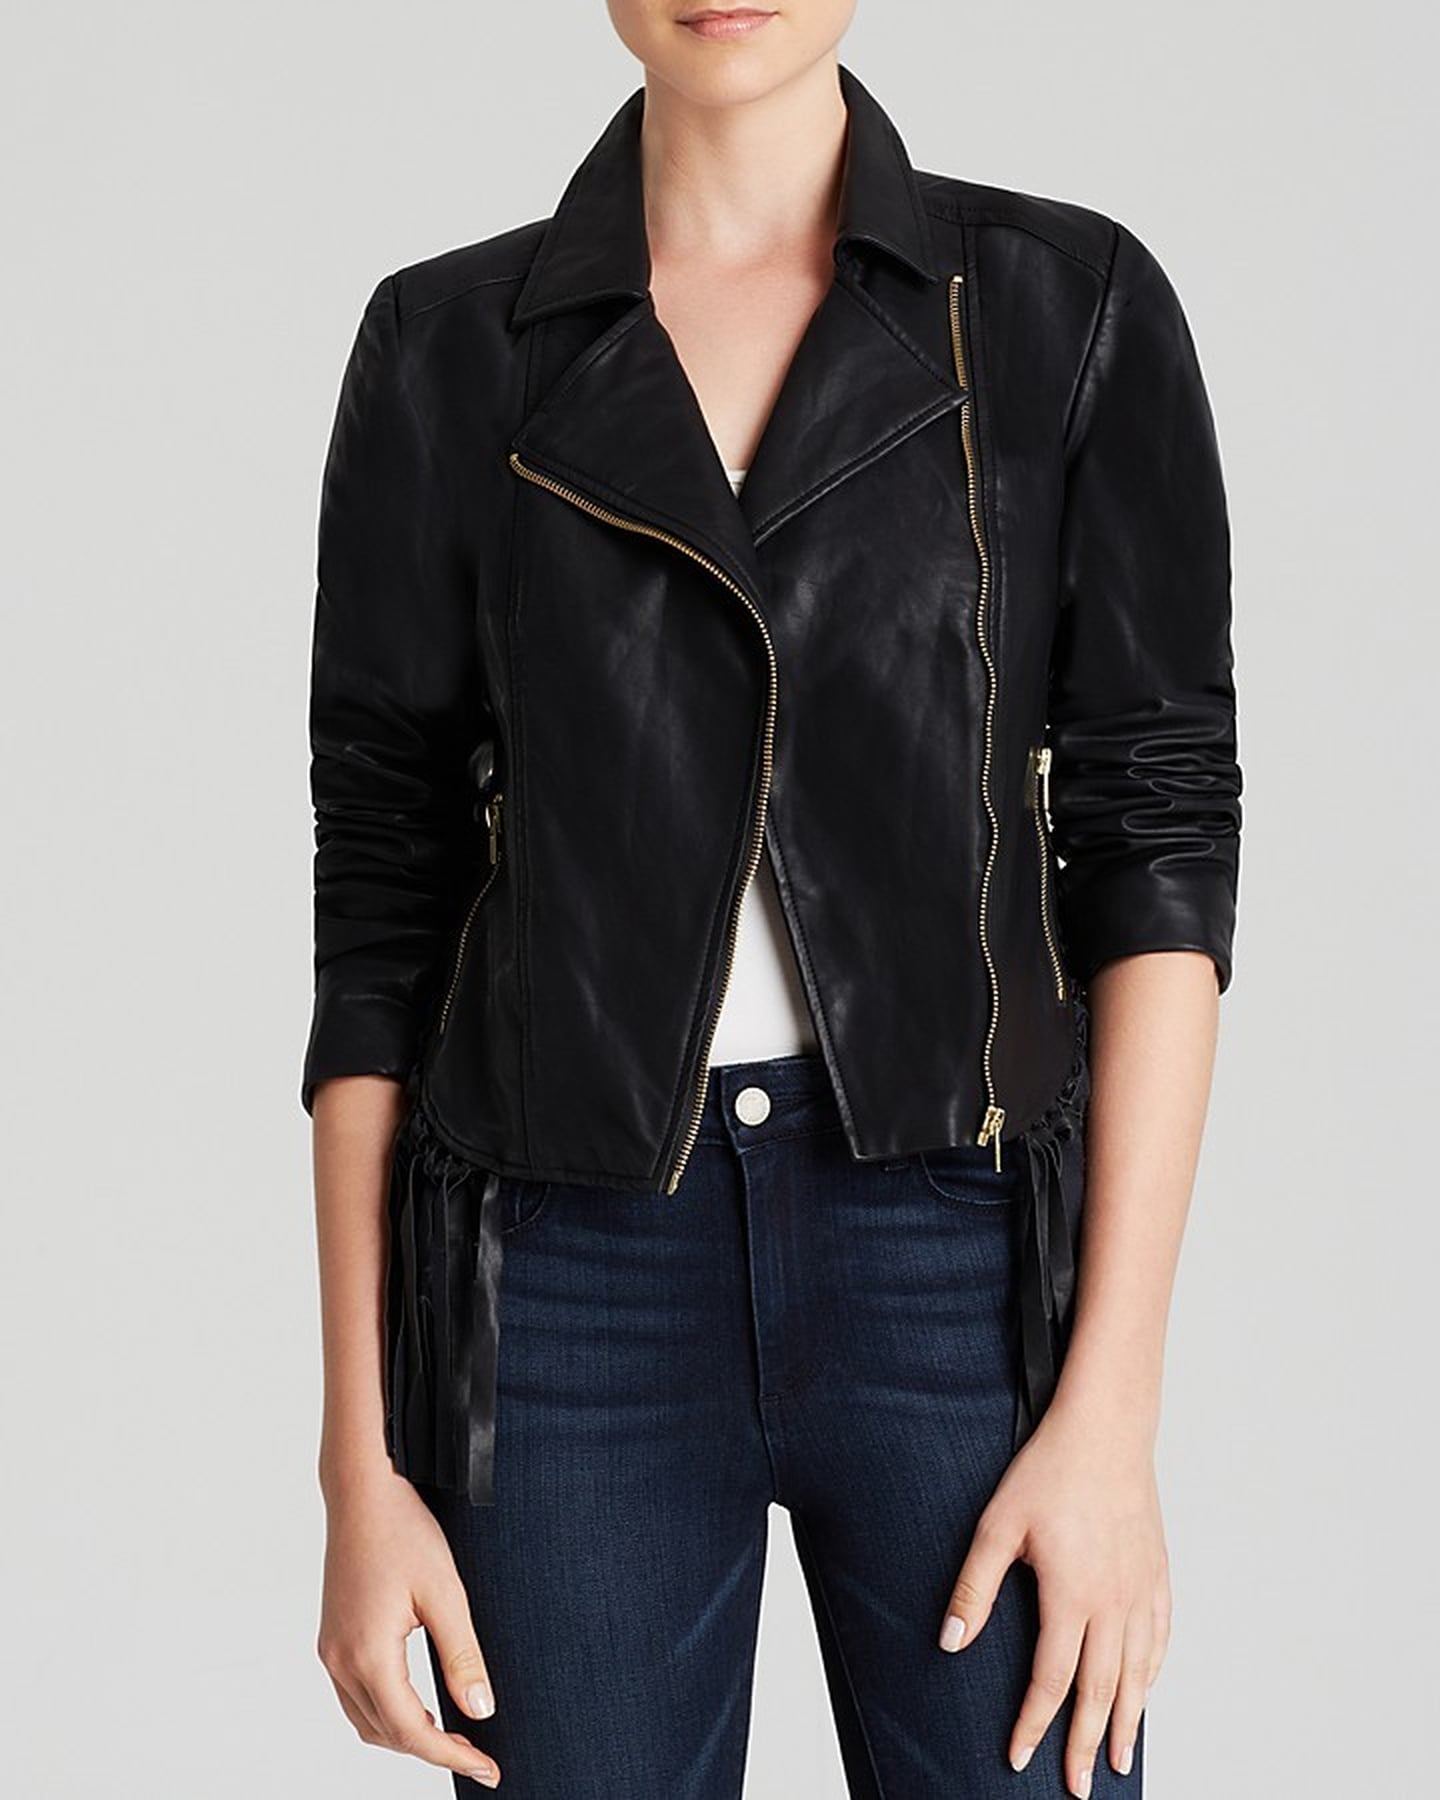 Black Fringe Jackets For Fall | POPSUGAR Fashion